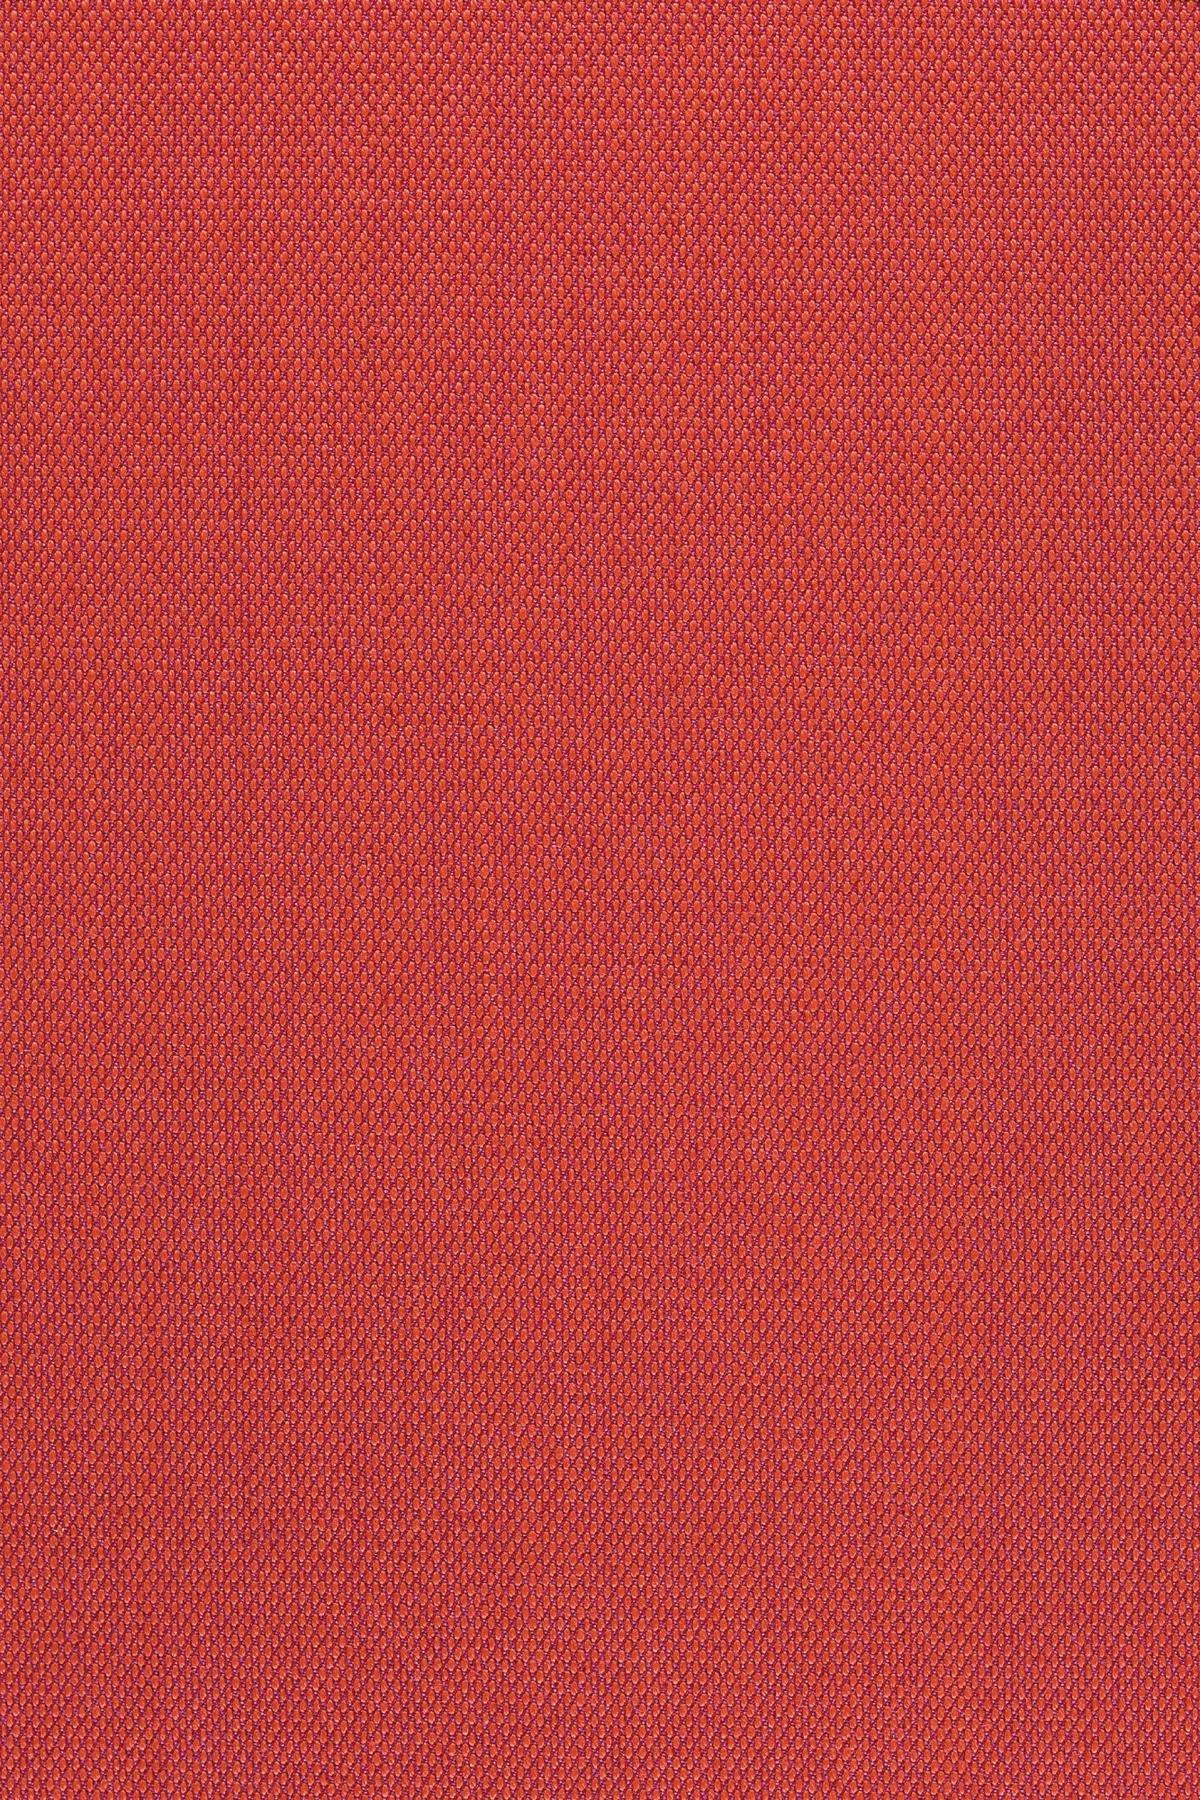 Fabric sample Steelcut Trio 3 553 red